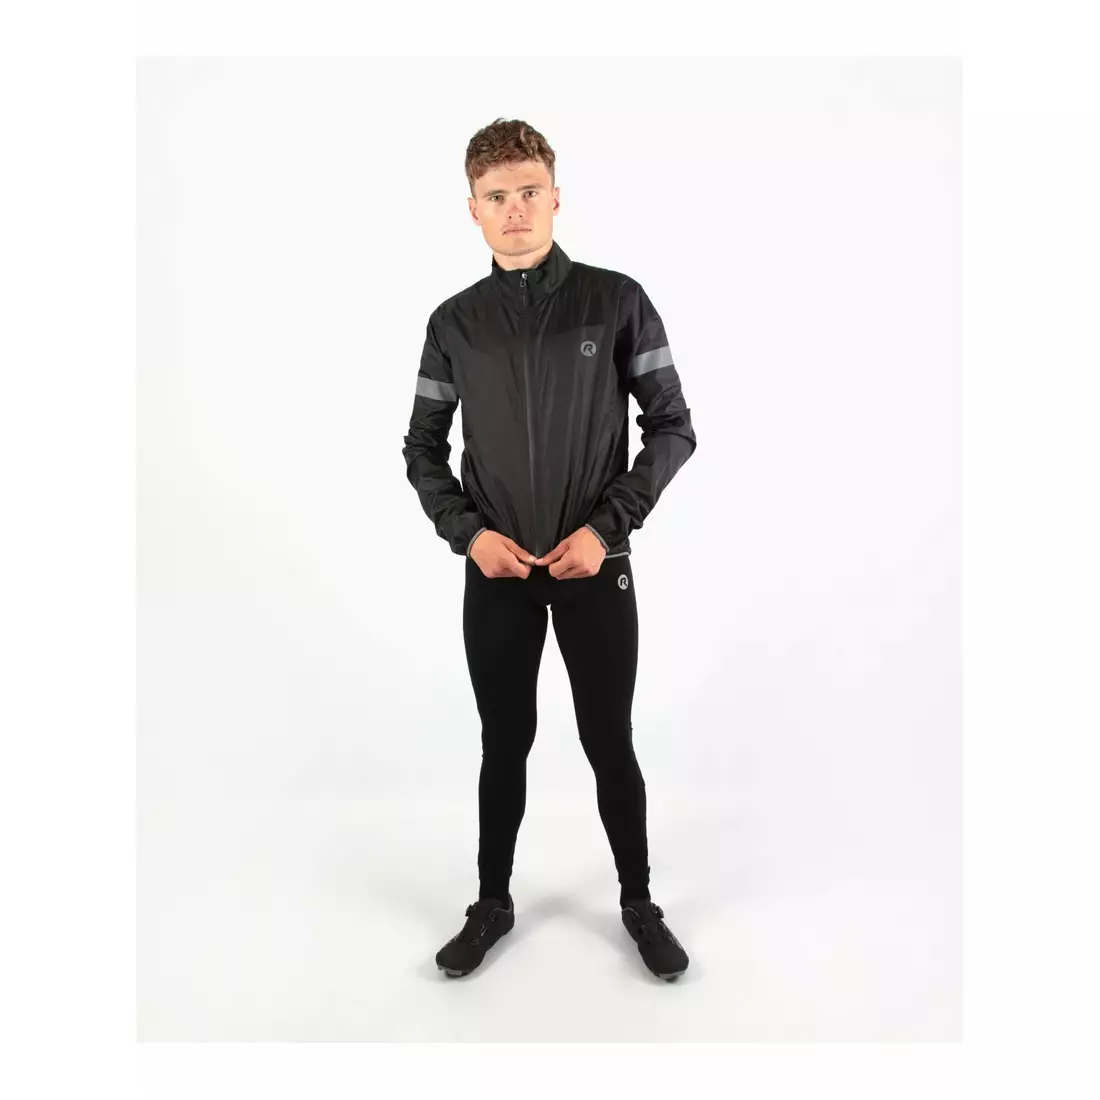 ROGELLI PROTECT Cycling rain jacket, Black 004.030